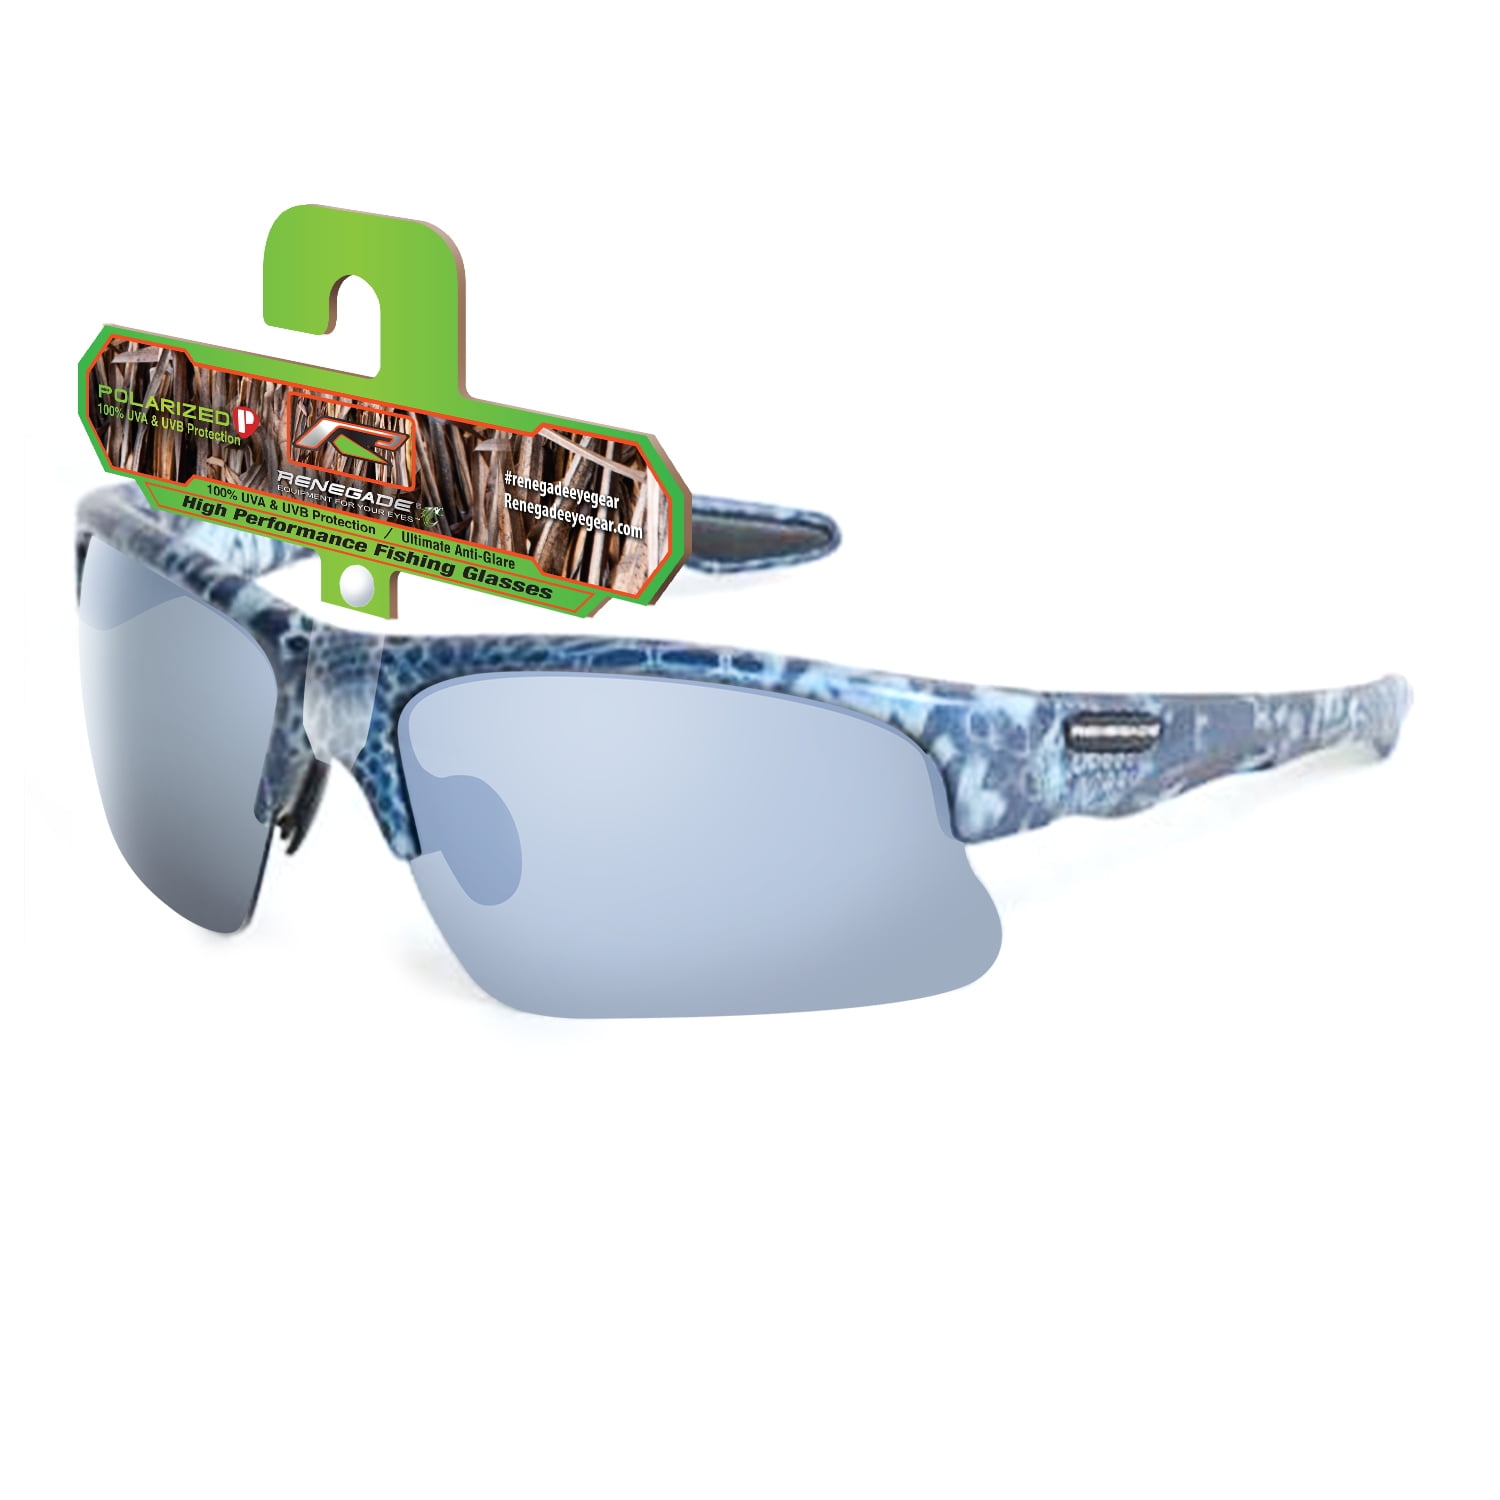 1 Pair Camouflage Polarized Sunglasses Cycling Fishing Hunting Glasses Eyewear